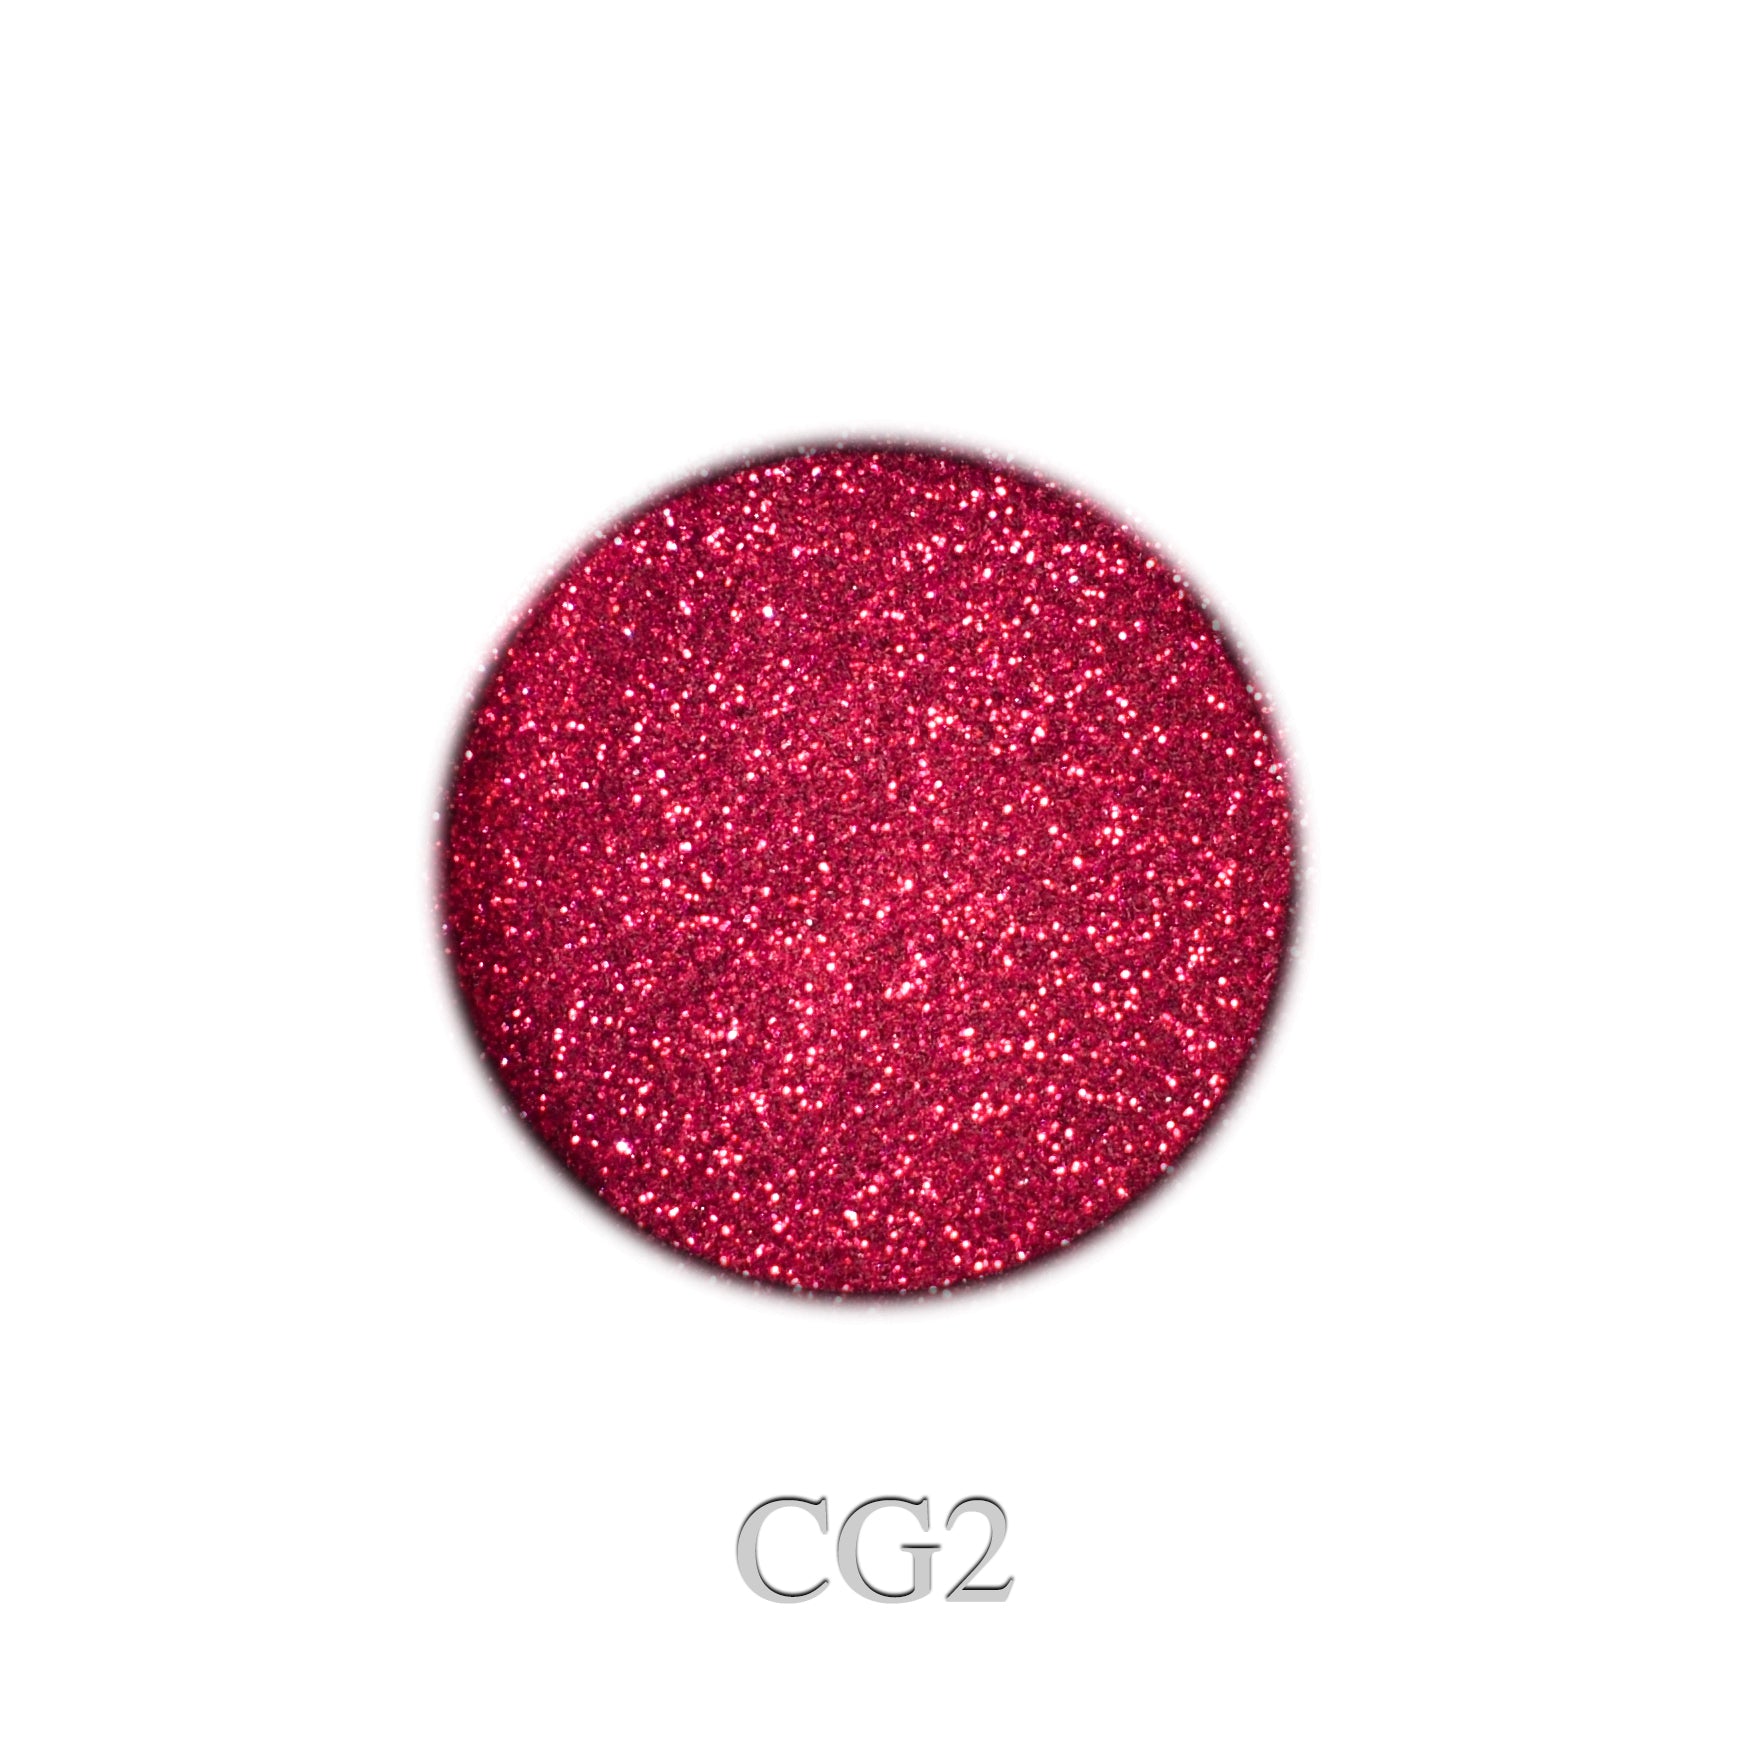 Cosmopolitan glitter CG2